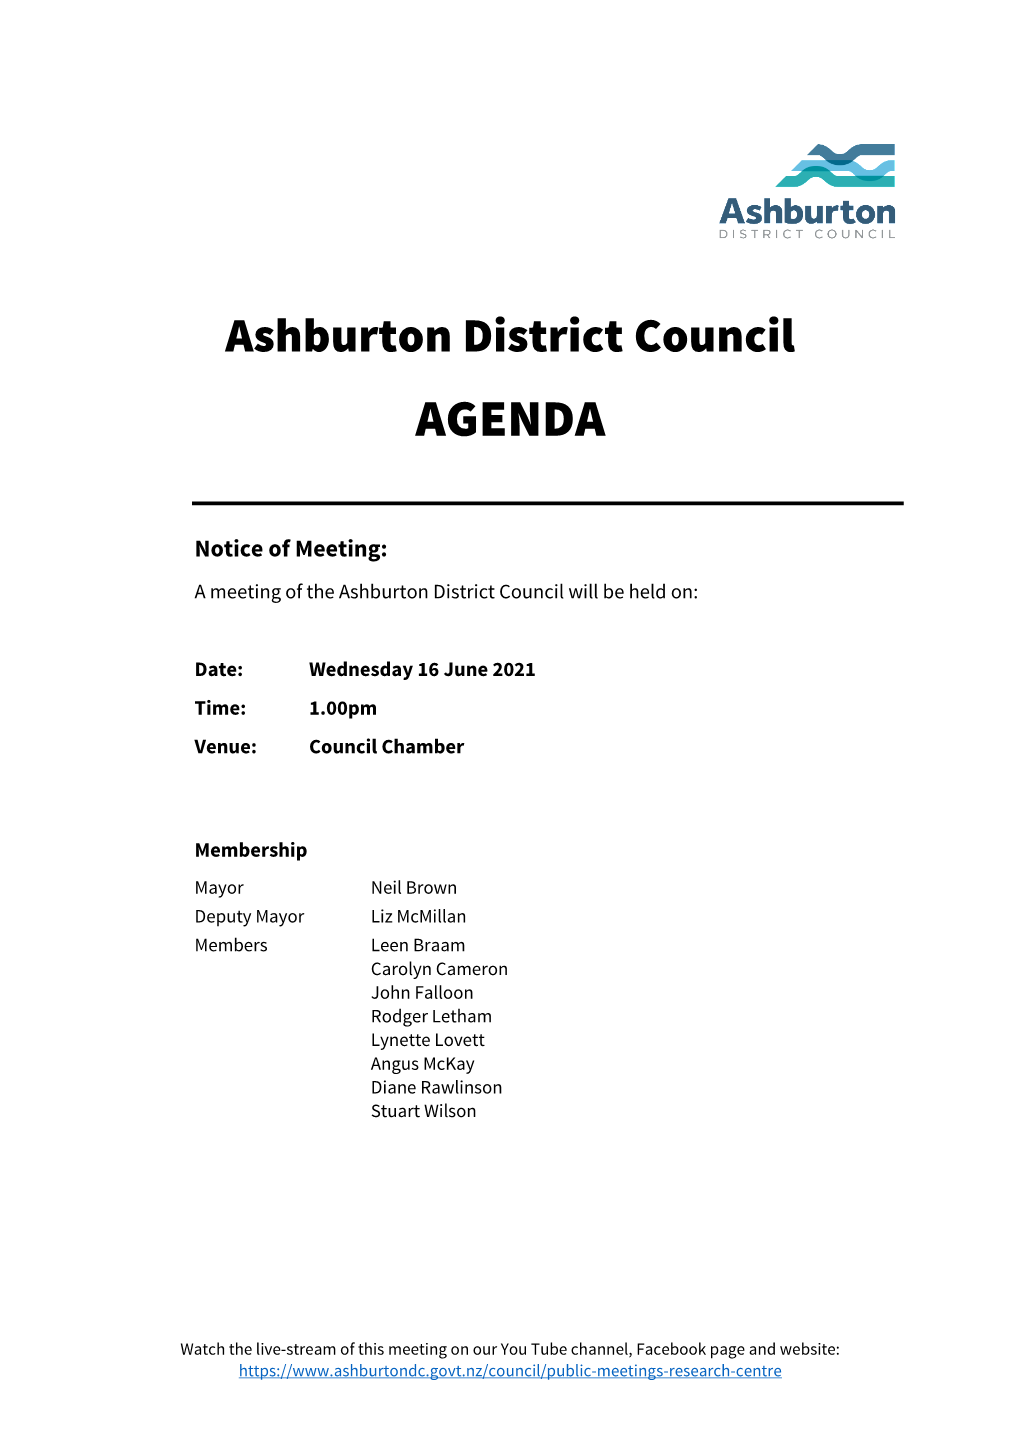 Council Agenda 16 June 2021